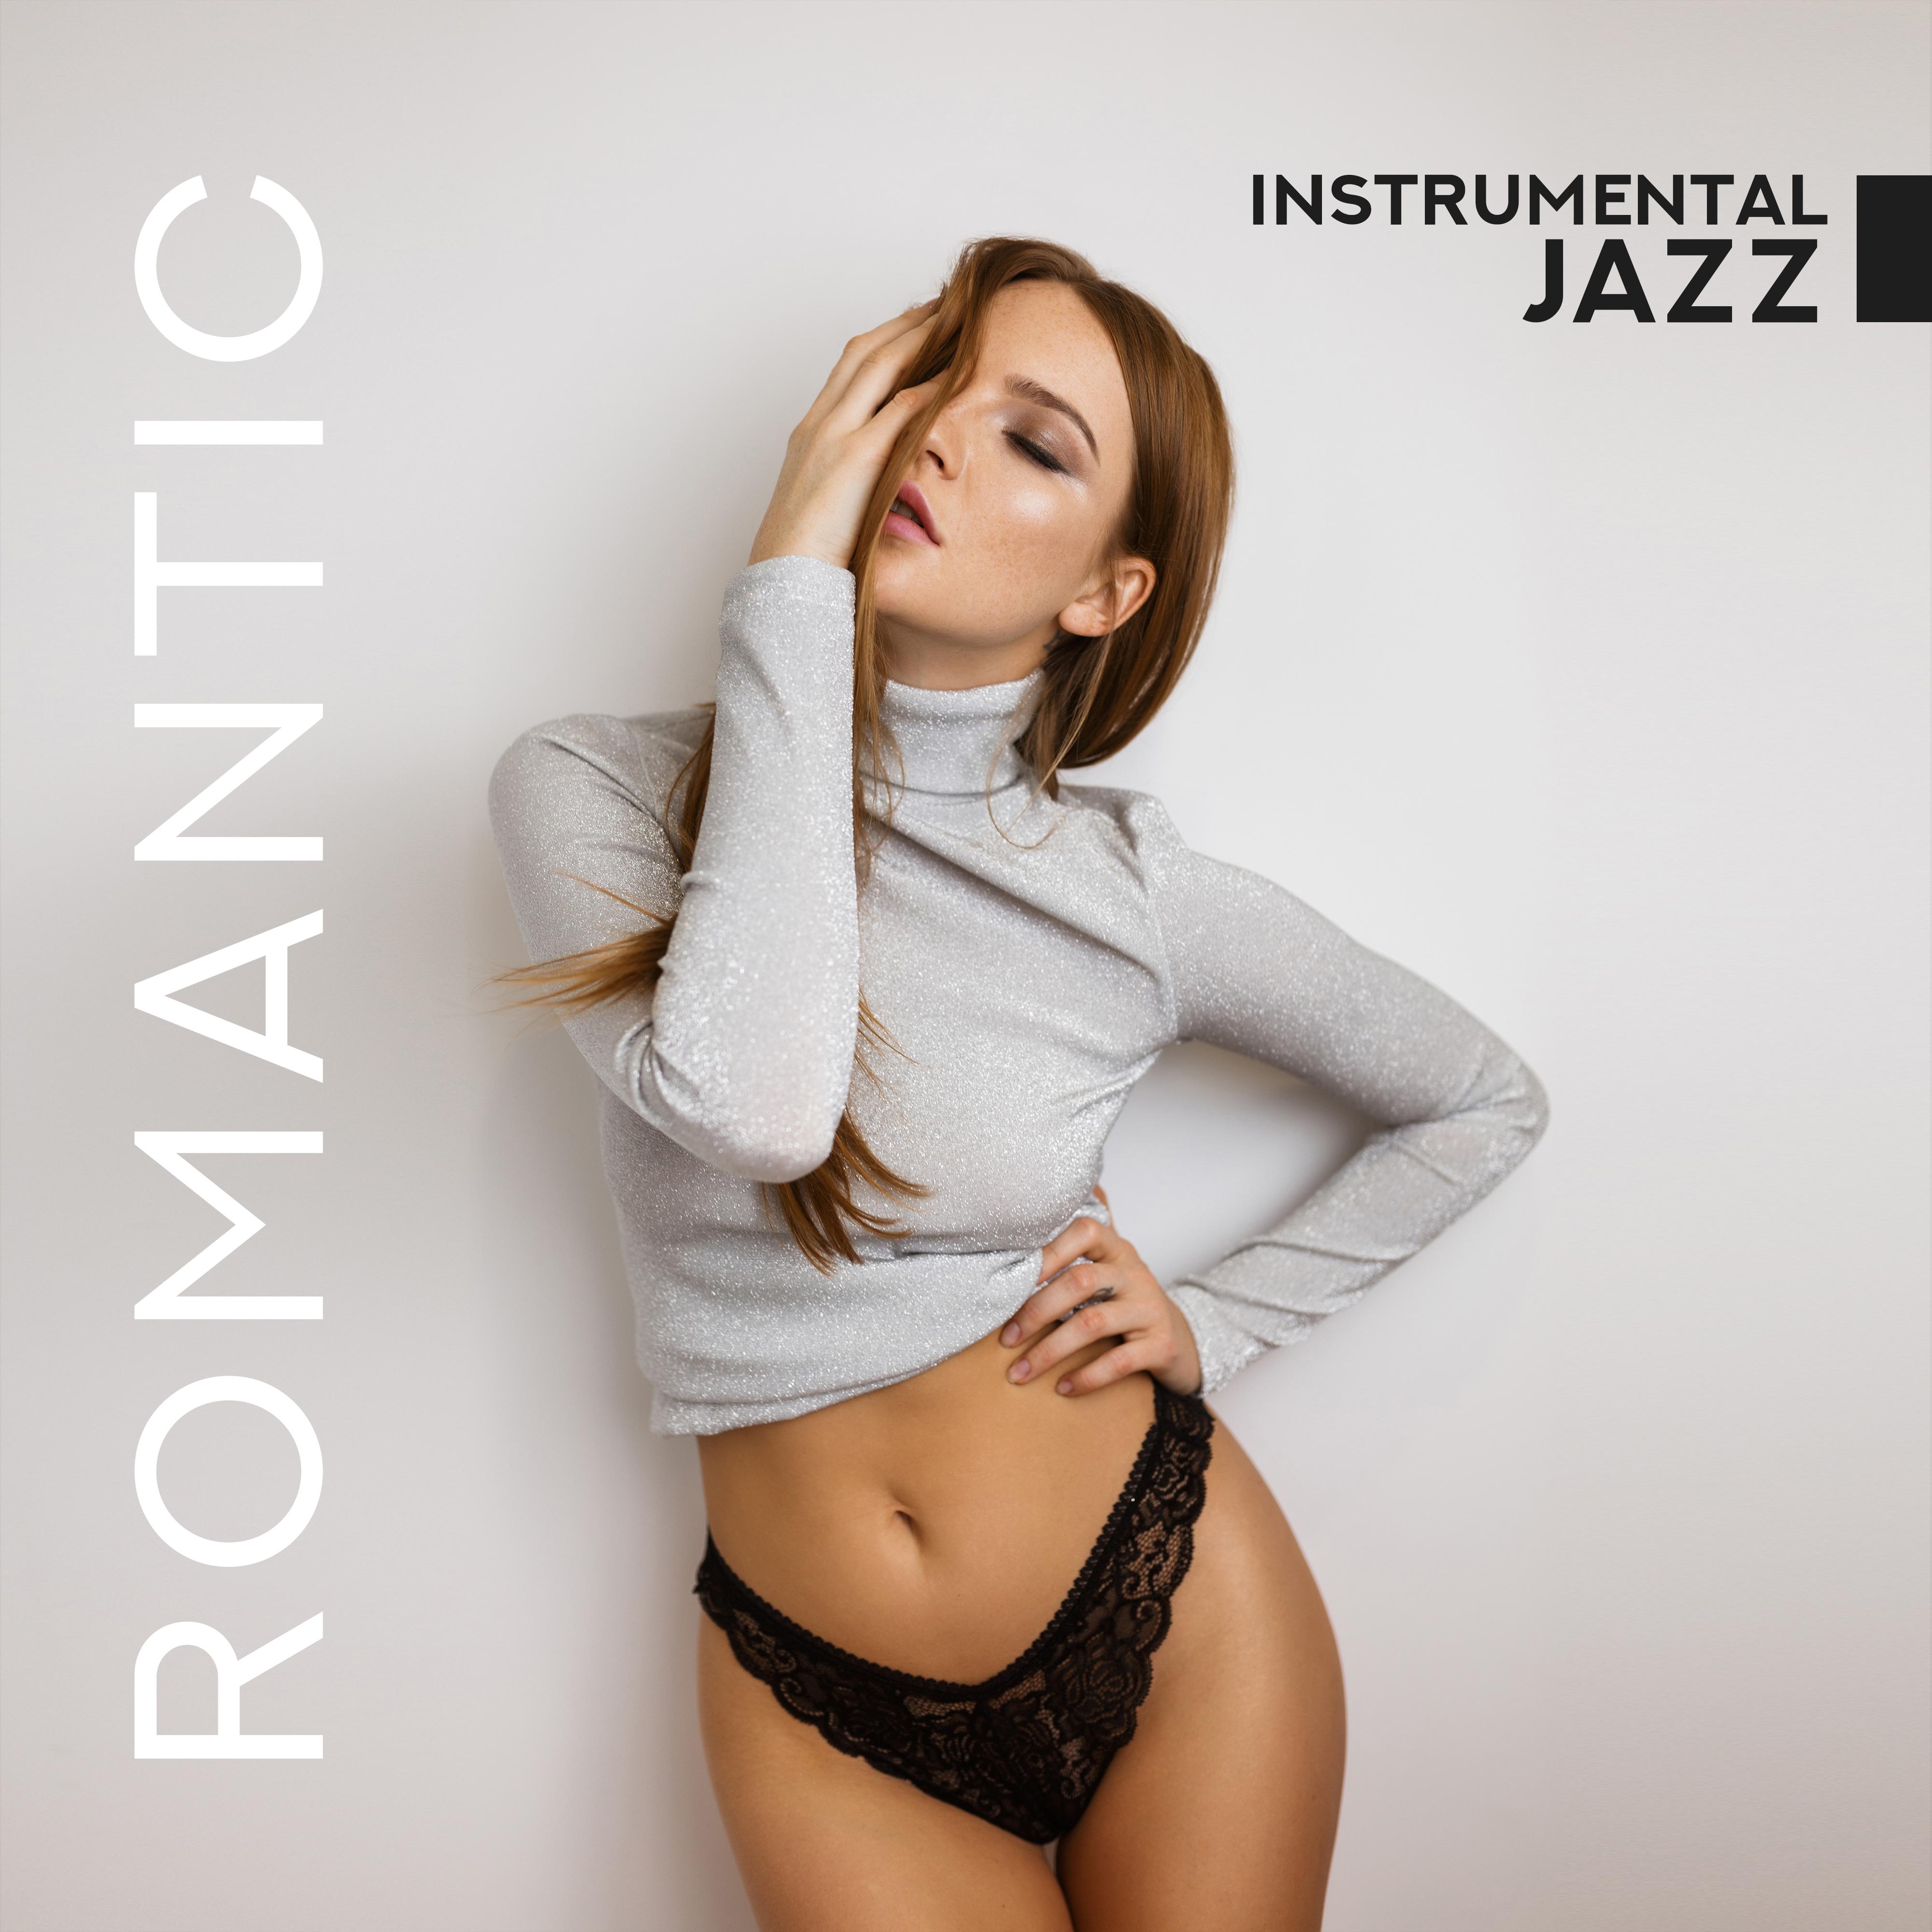 Romantic Instrumental Jazz - Universal Jazz Music Creating a Unique Romantic Atmosphere